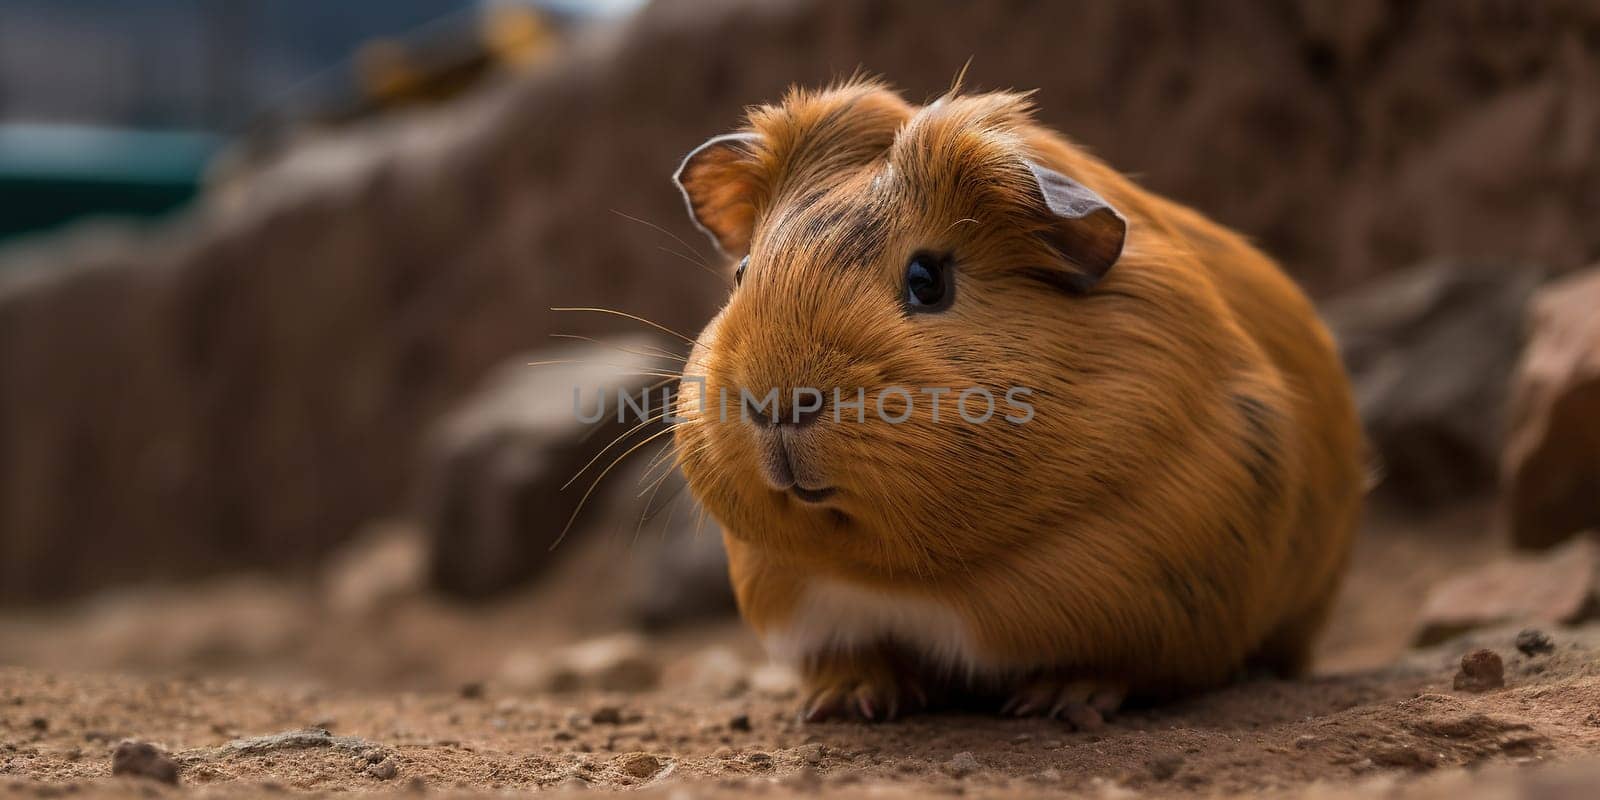 Cute Guinea Pig On A Grind, Close Up by GekaSkr